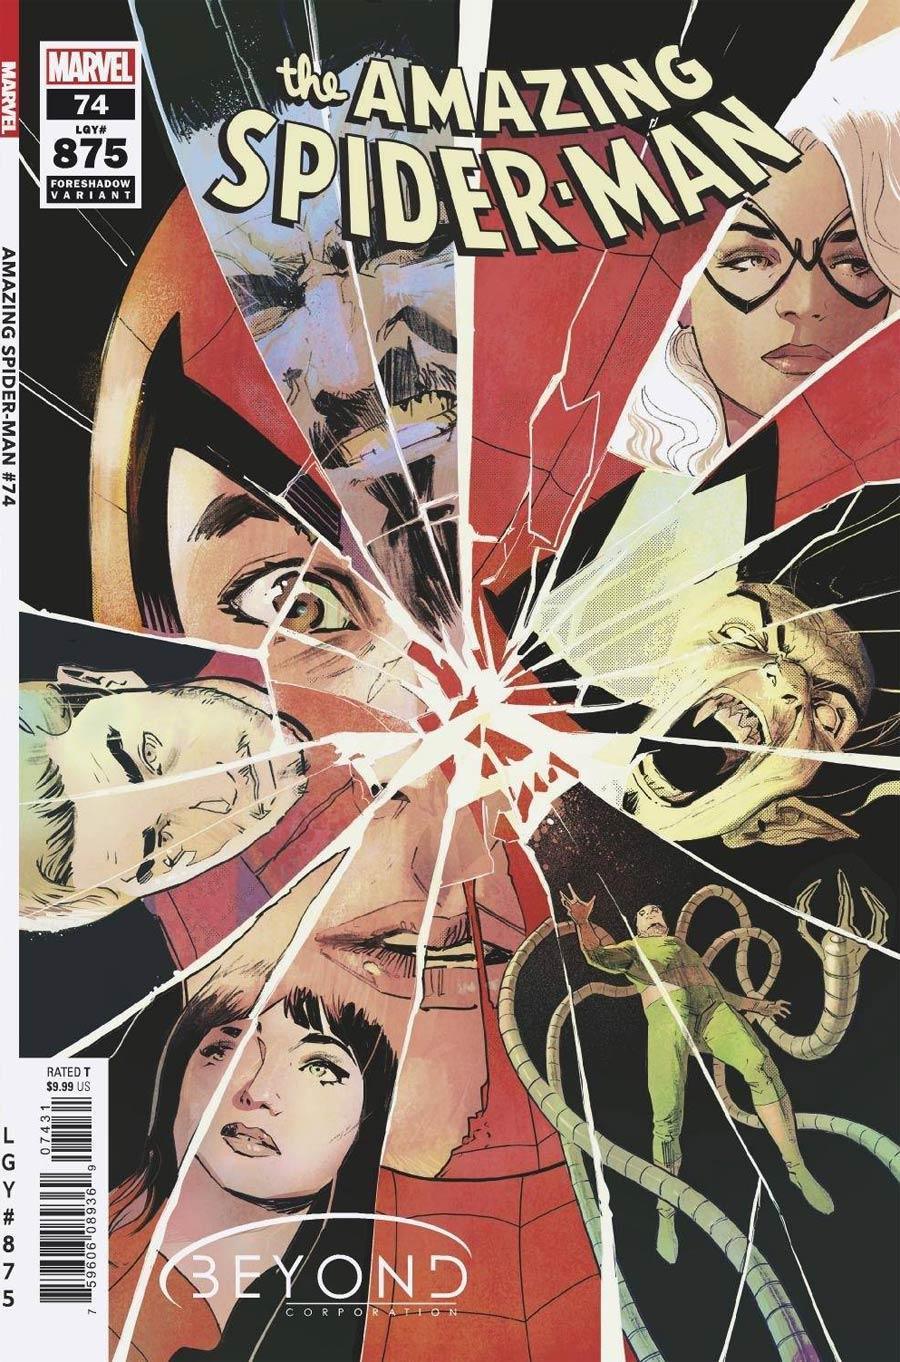 AMAZING SPIDER-MAN VOL 5 (2018) #74 25 COPY INCV FORESHADOW VAR - Kings Comics